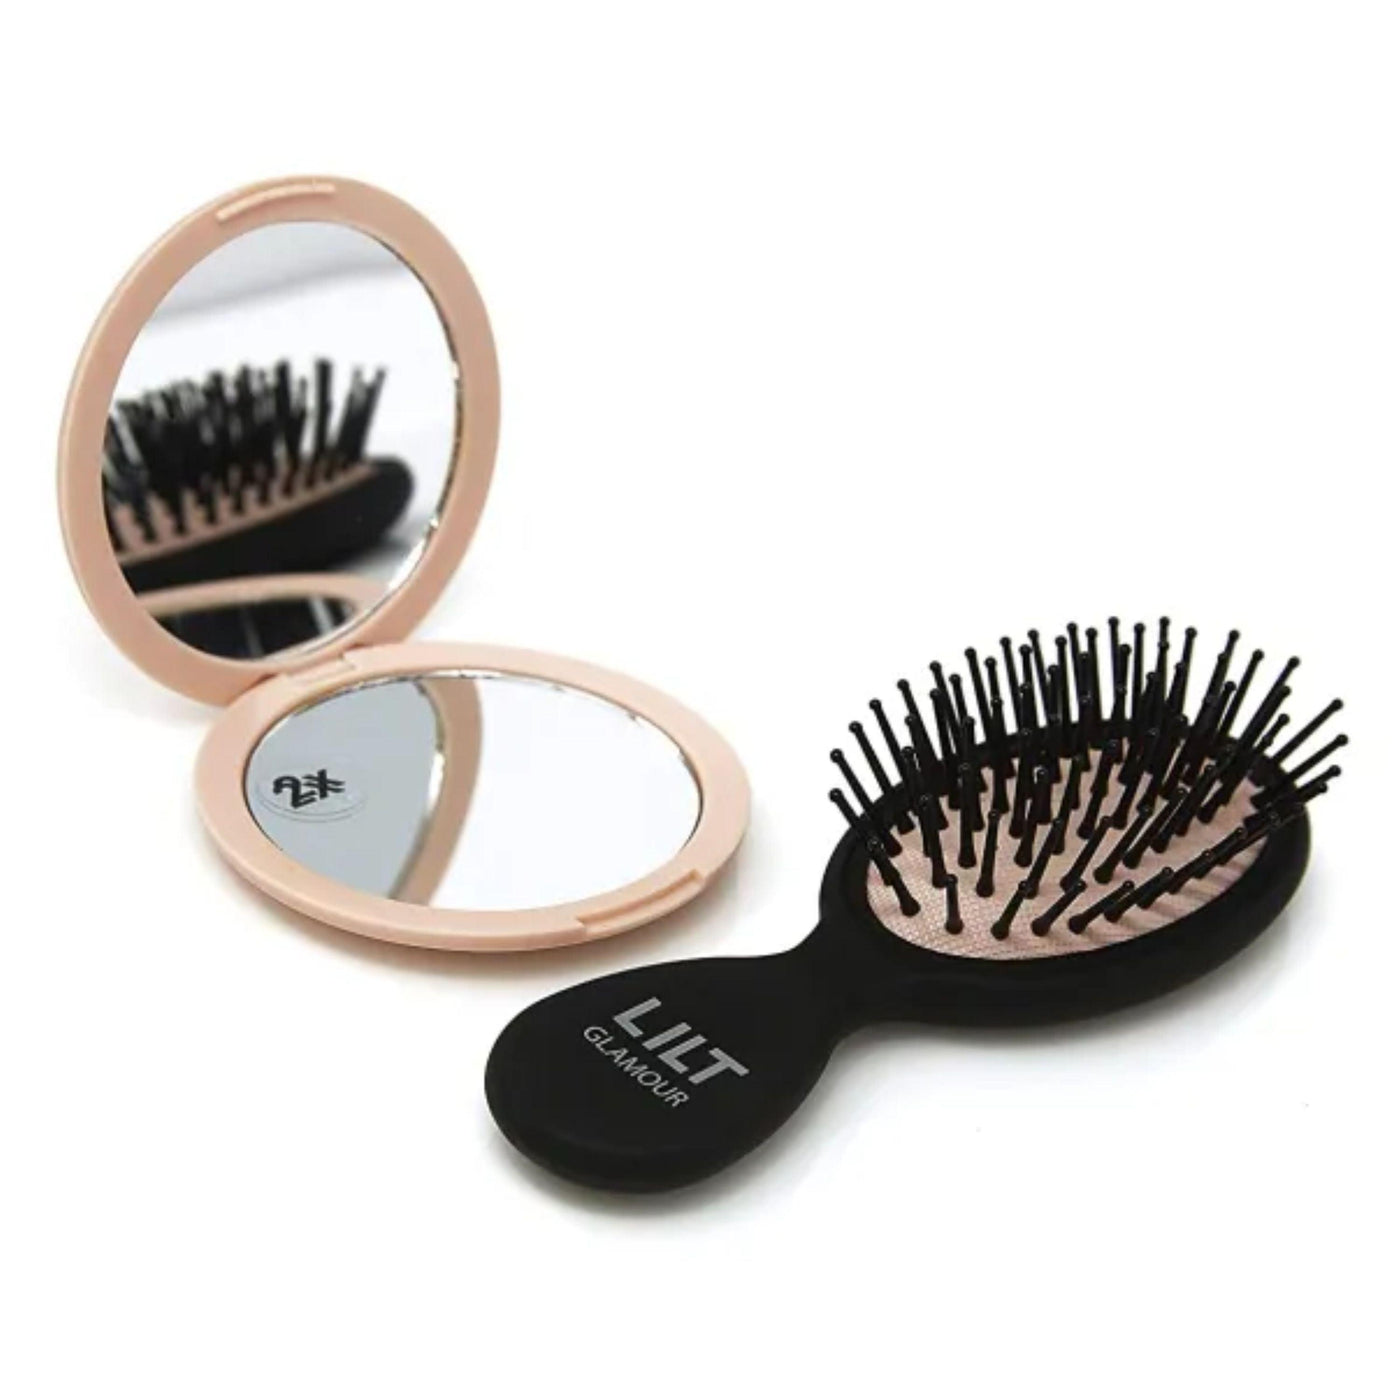 Lilt 2-Piece Compact Hair Brush & Mirror Gift Set - Vysn